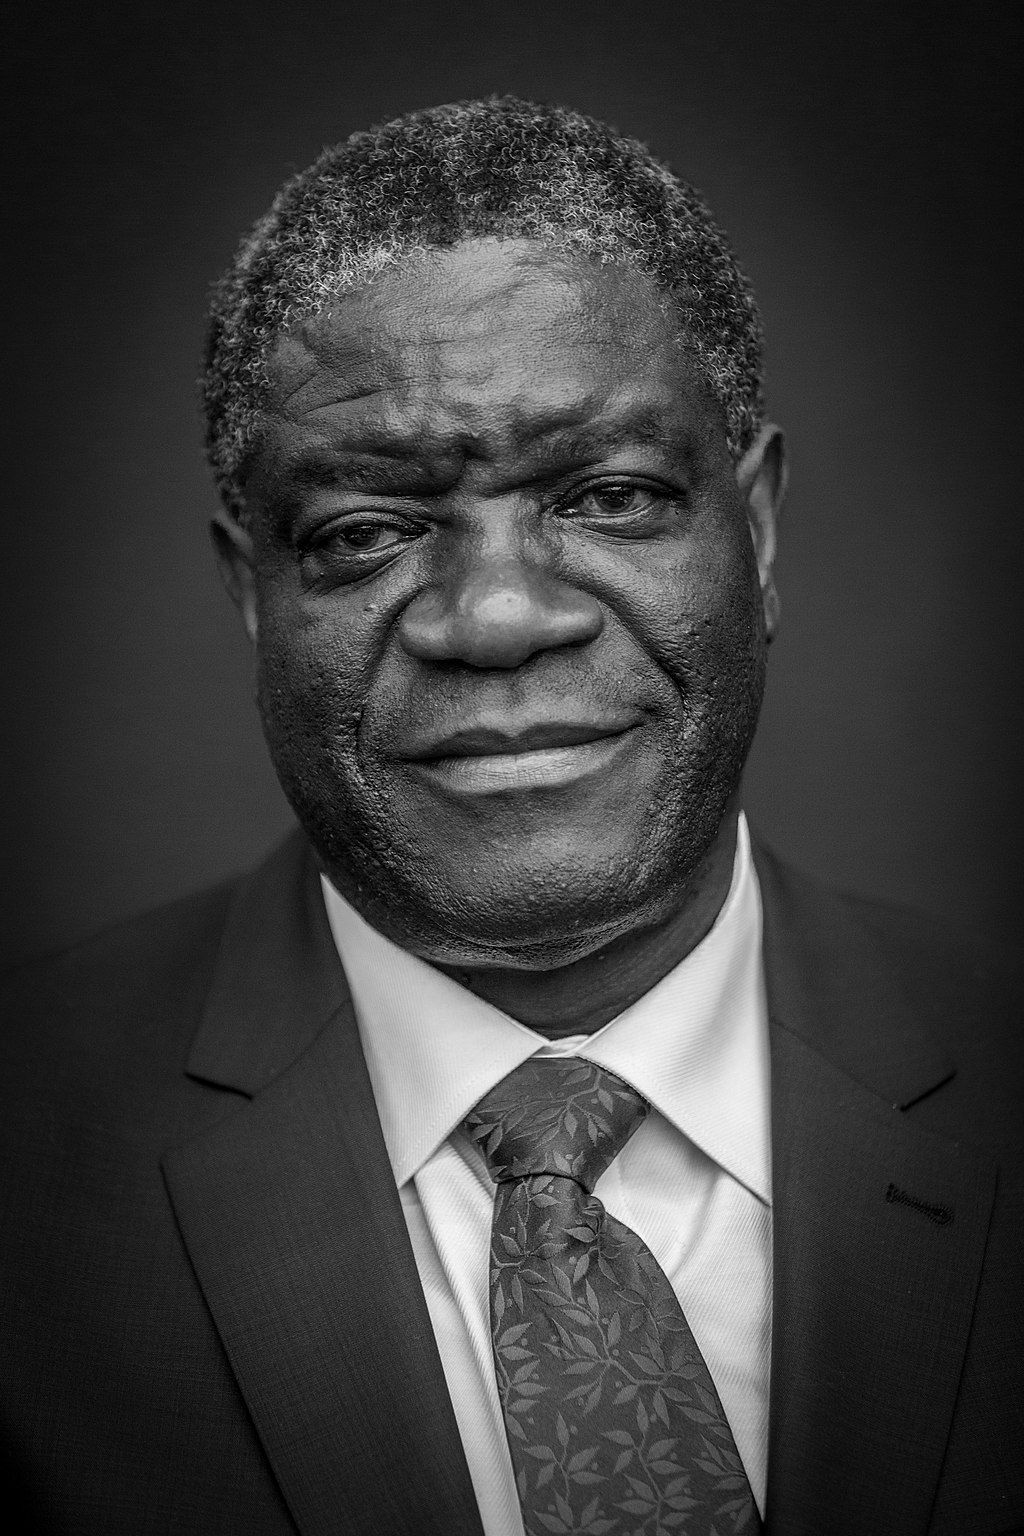 Denis_Mukwege_par_Claude_Truong-Ngoc_novembre_2014@wiki